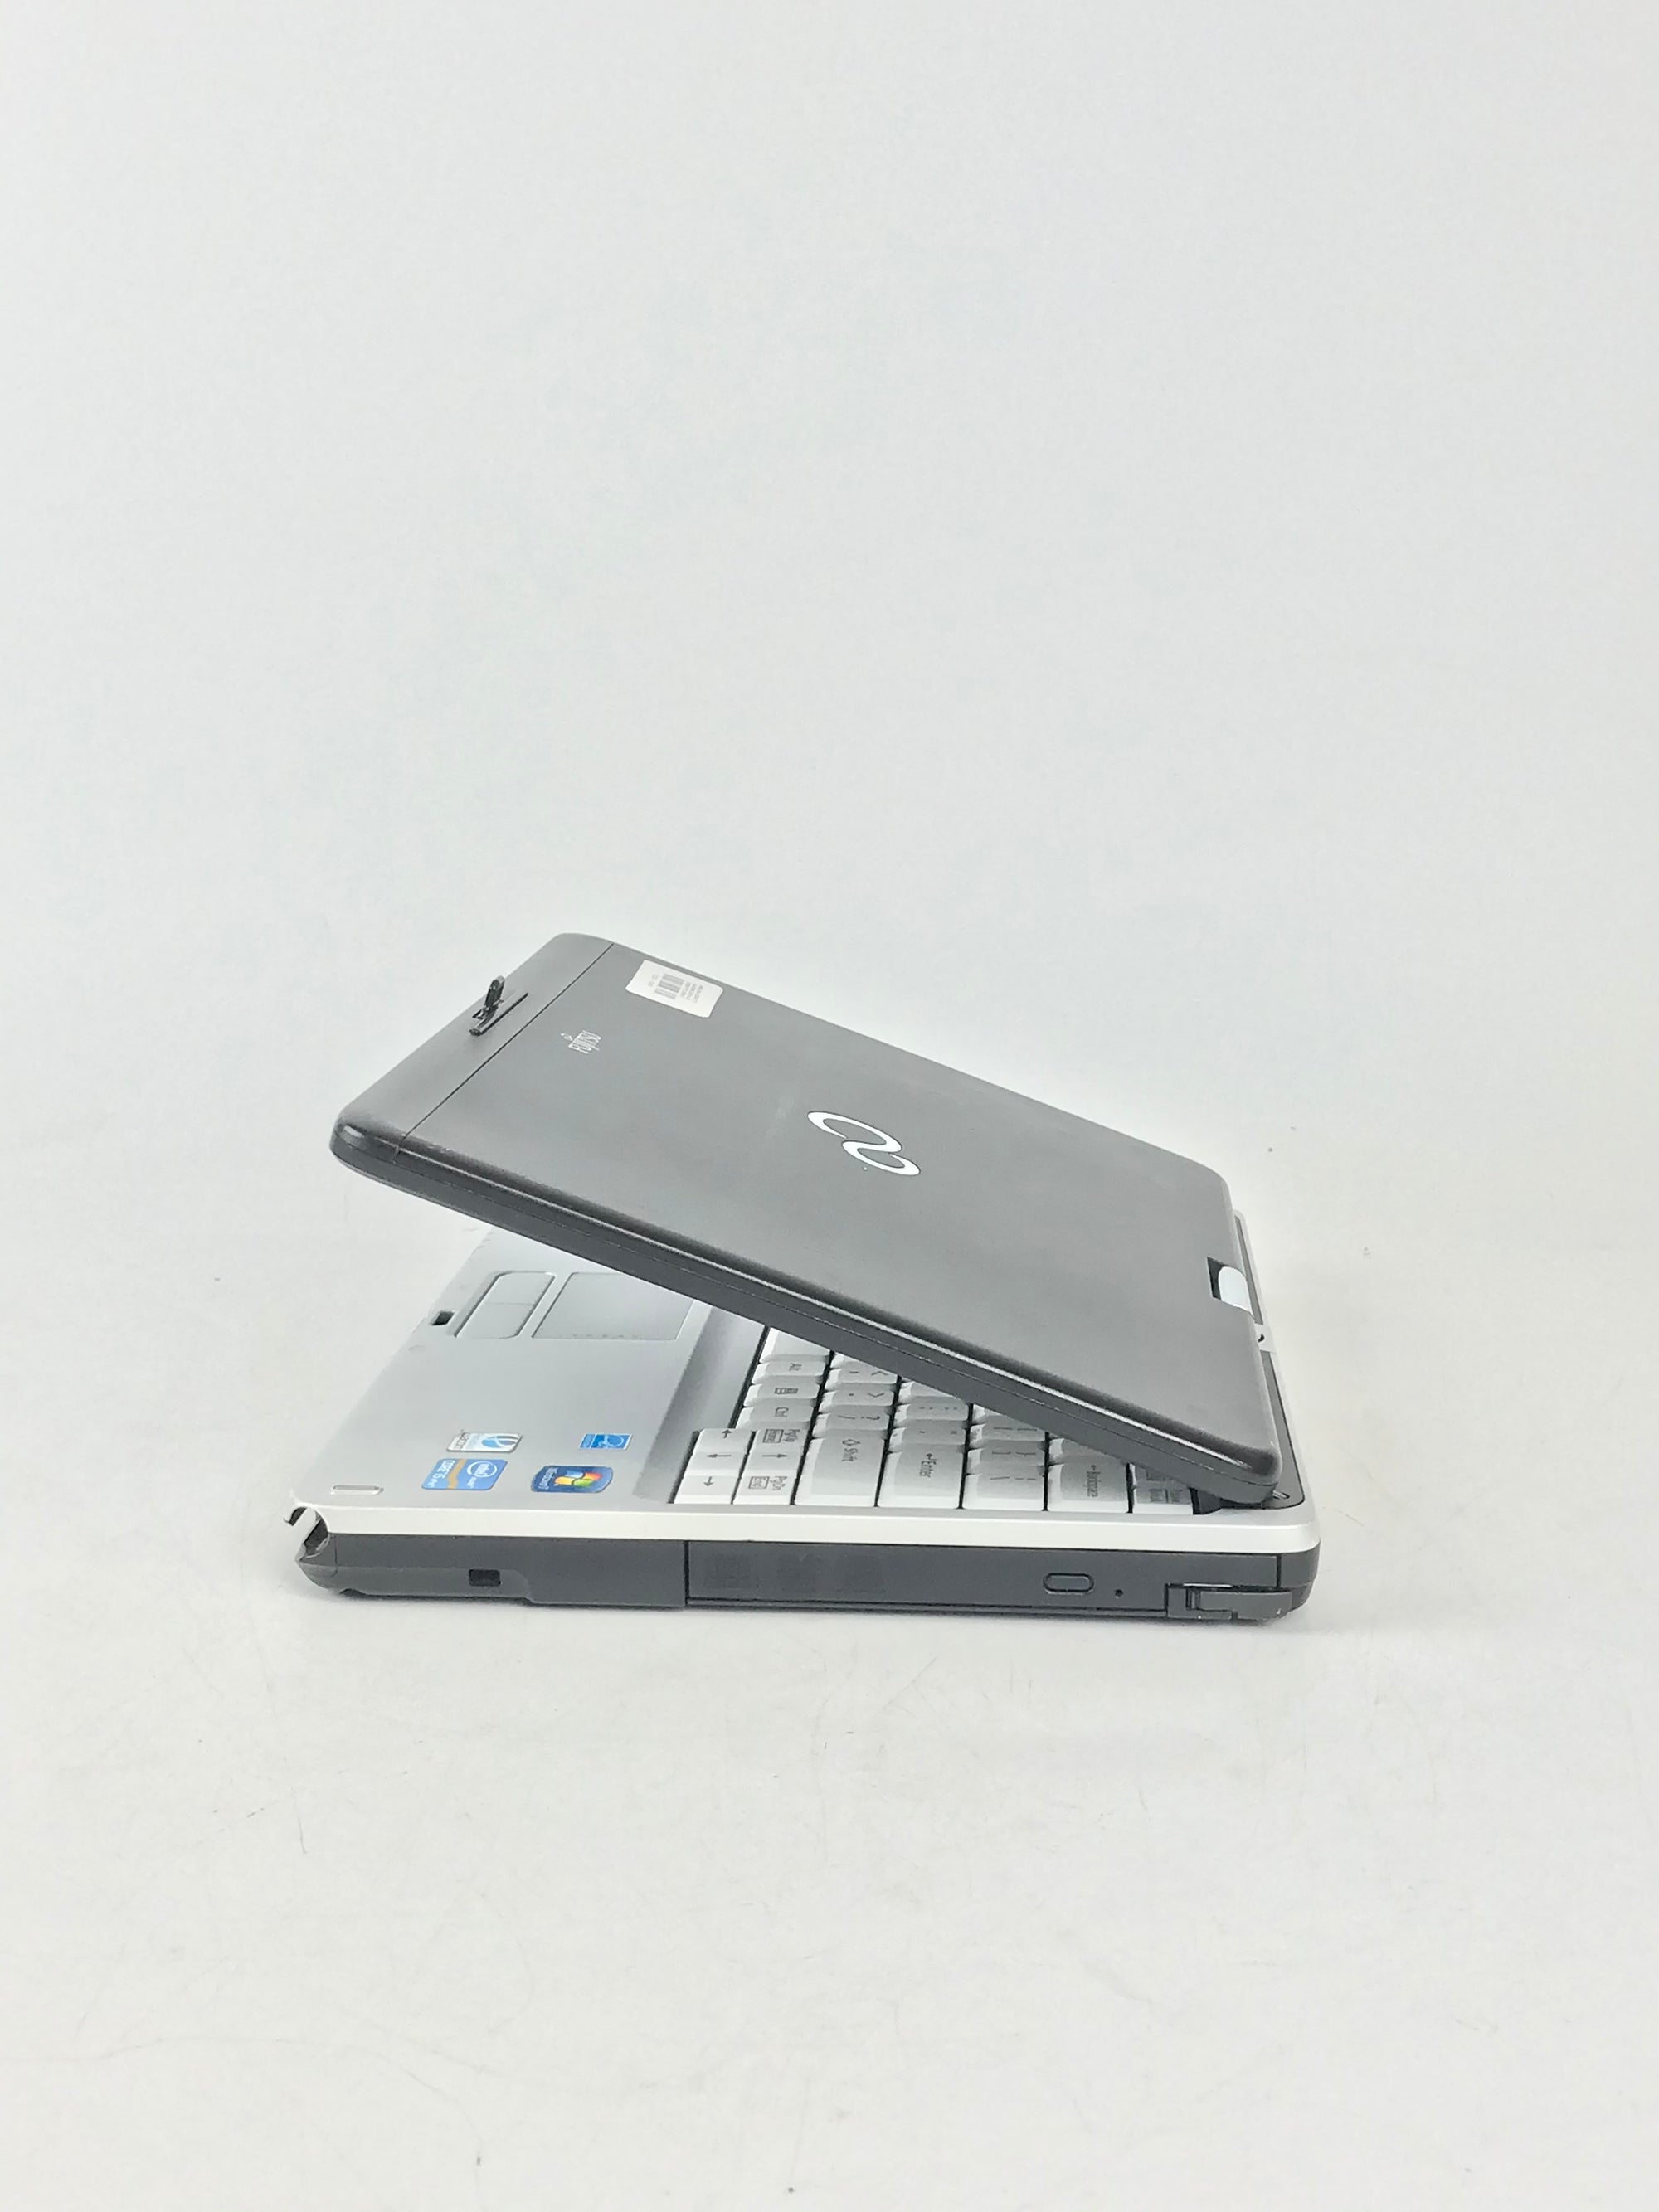 Fujitsu Lifebook T731 2-in-1 Touch 12.1” i5-2520M 2.5GHz 4GB RAM